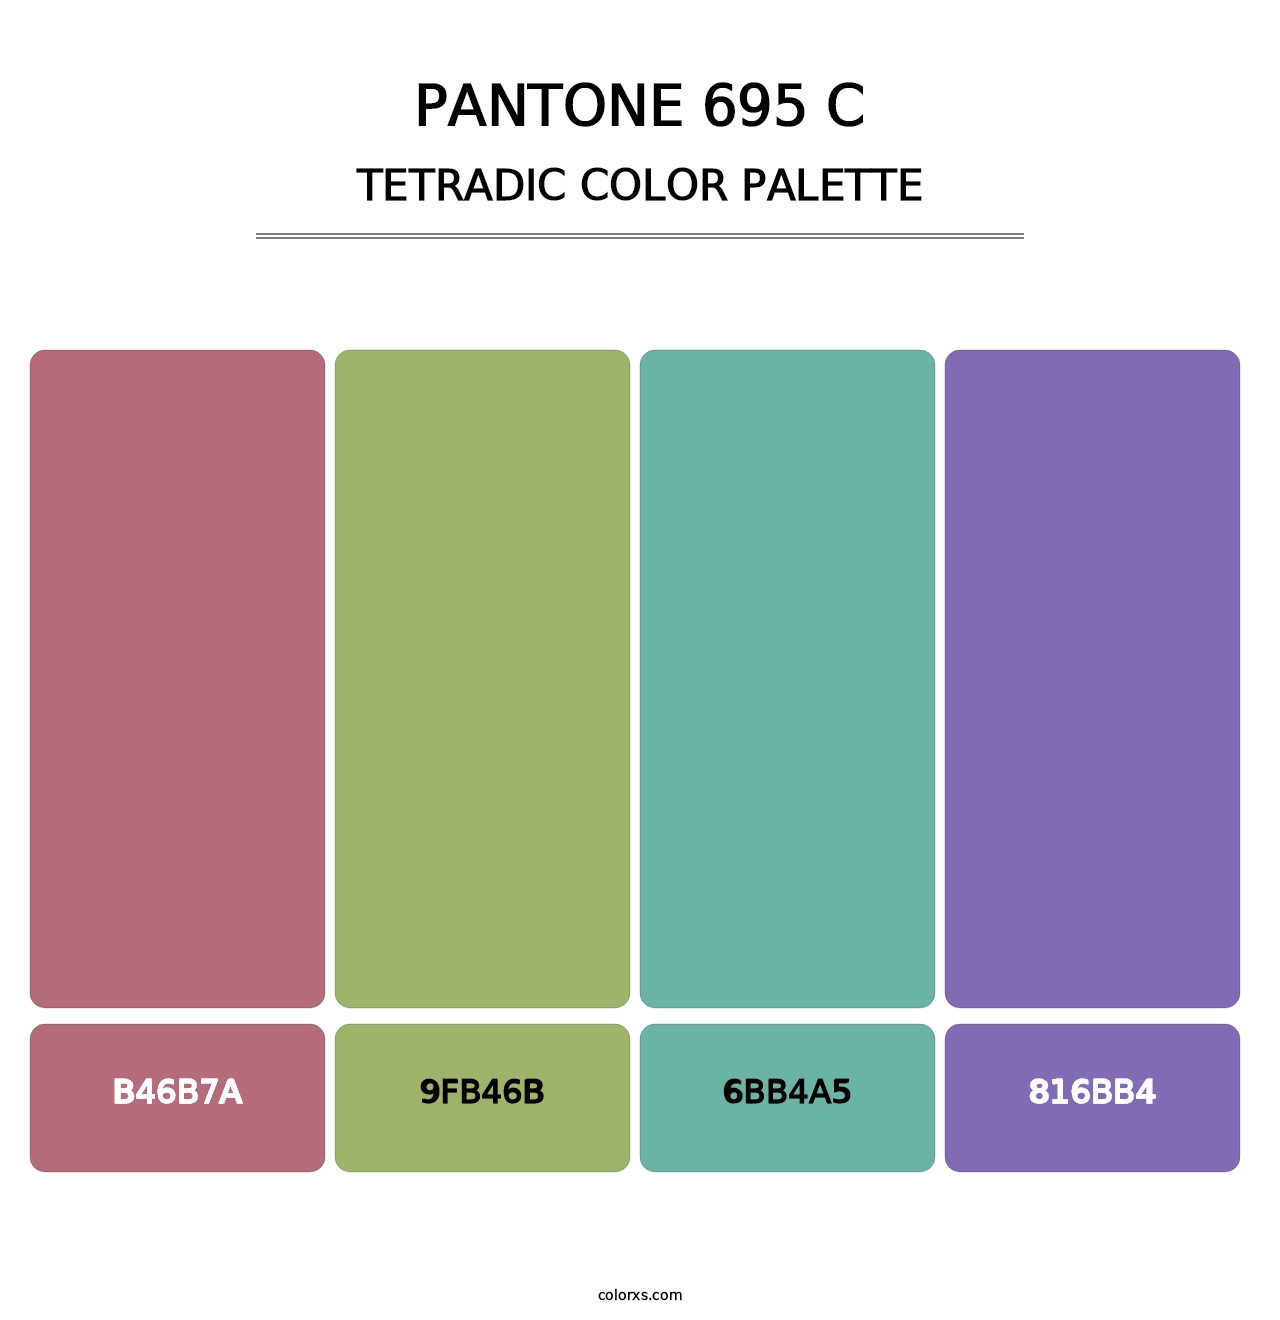 PANTONE 695 C - Tetradic Color Palette